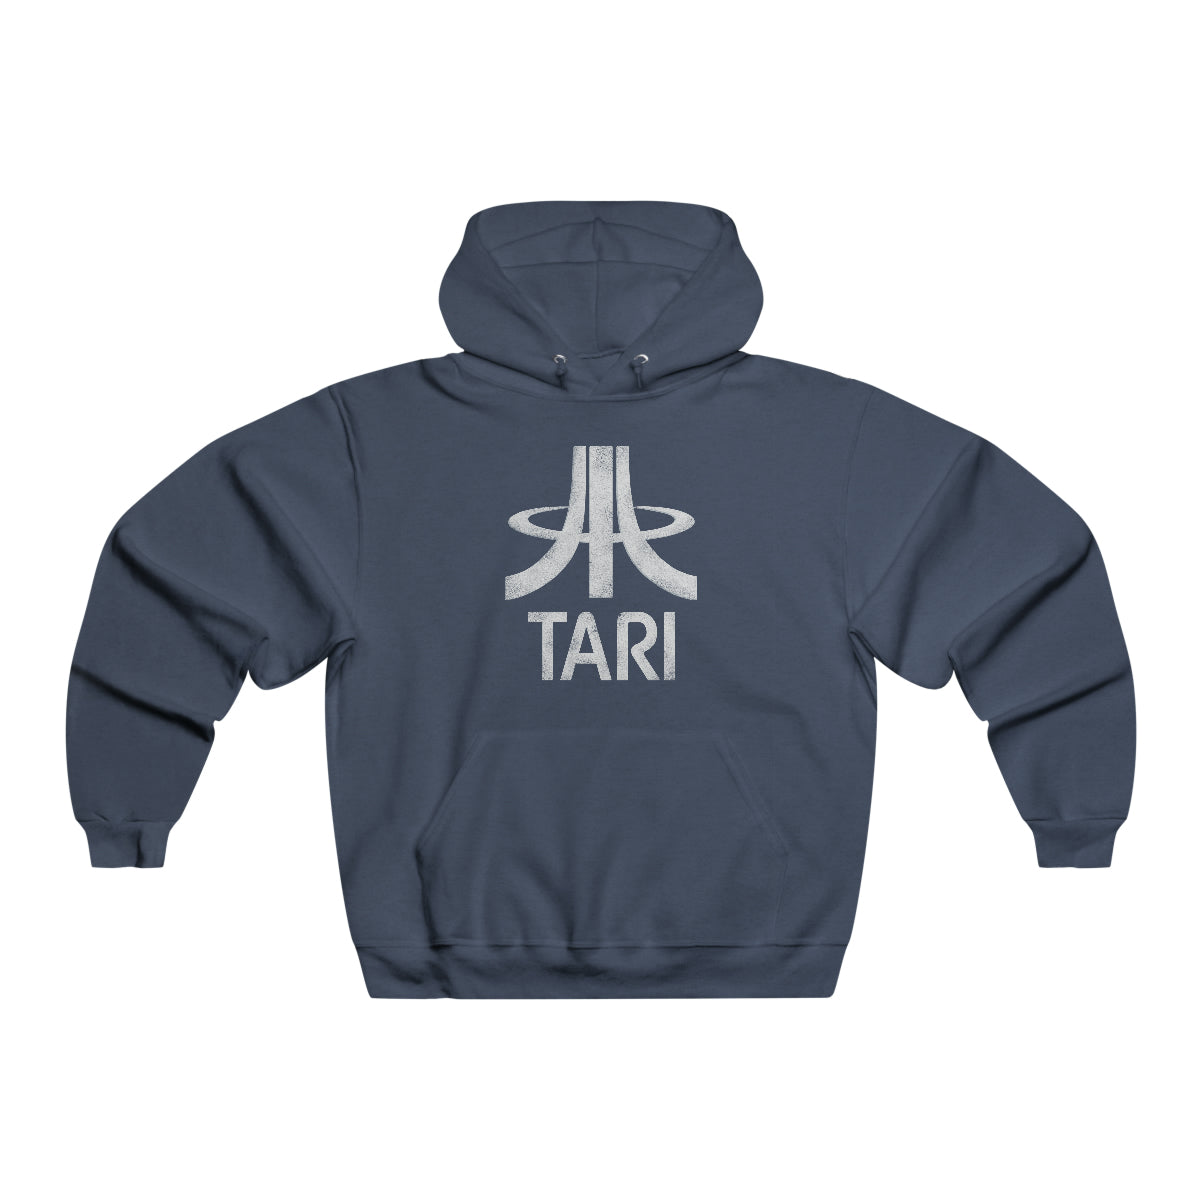 Tari Game - Hooded Sweatshirt